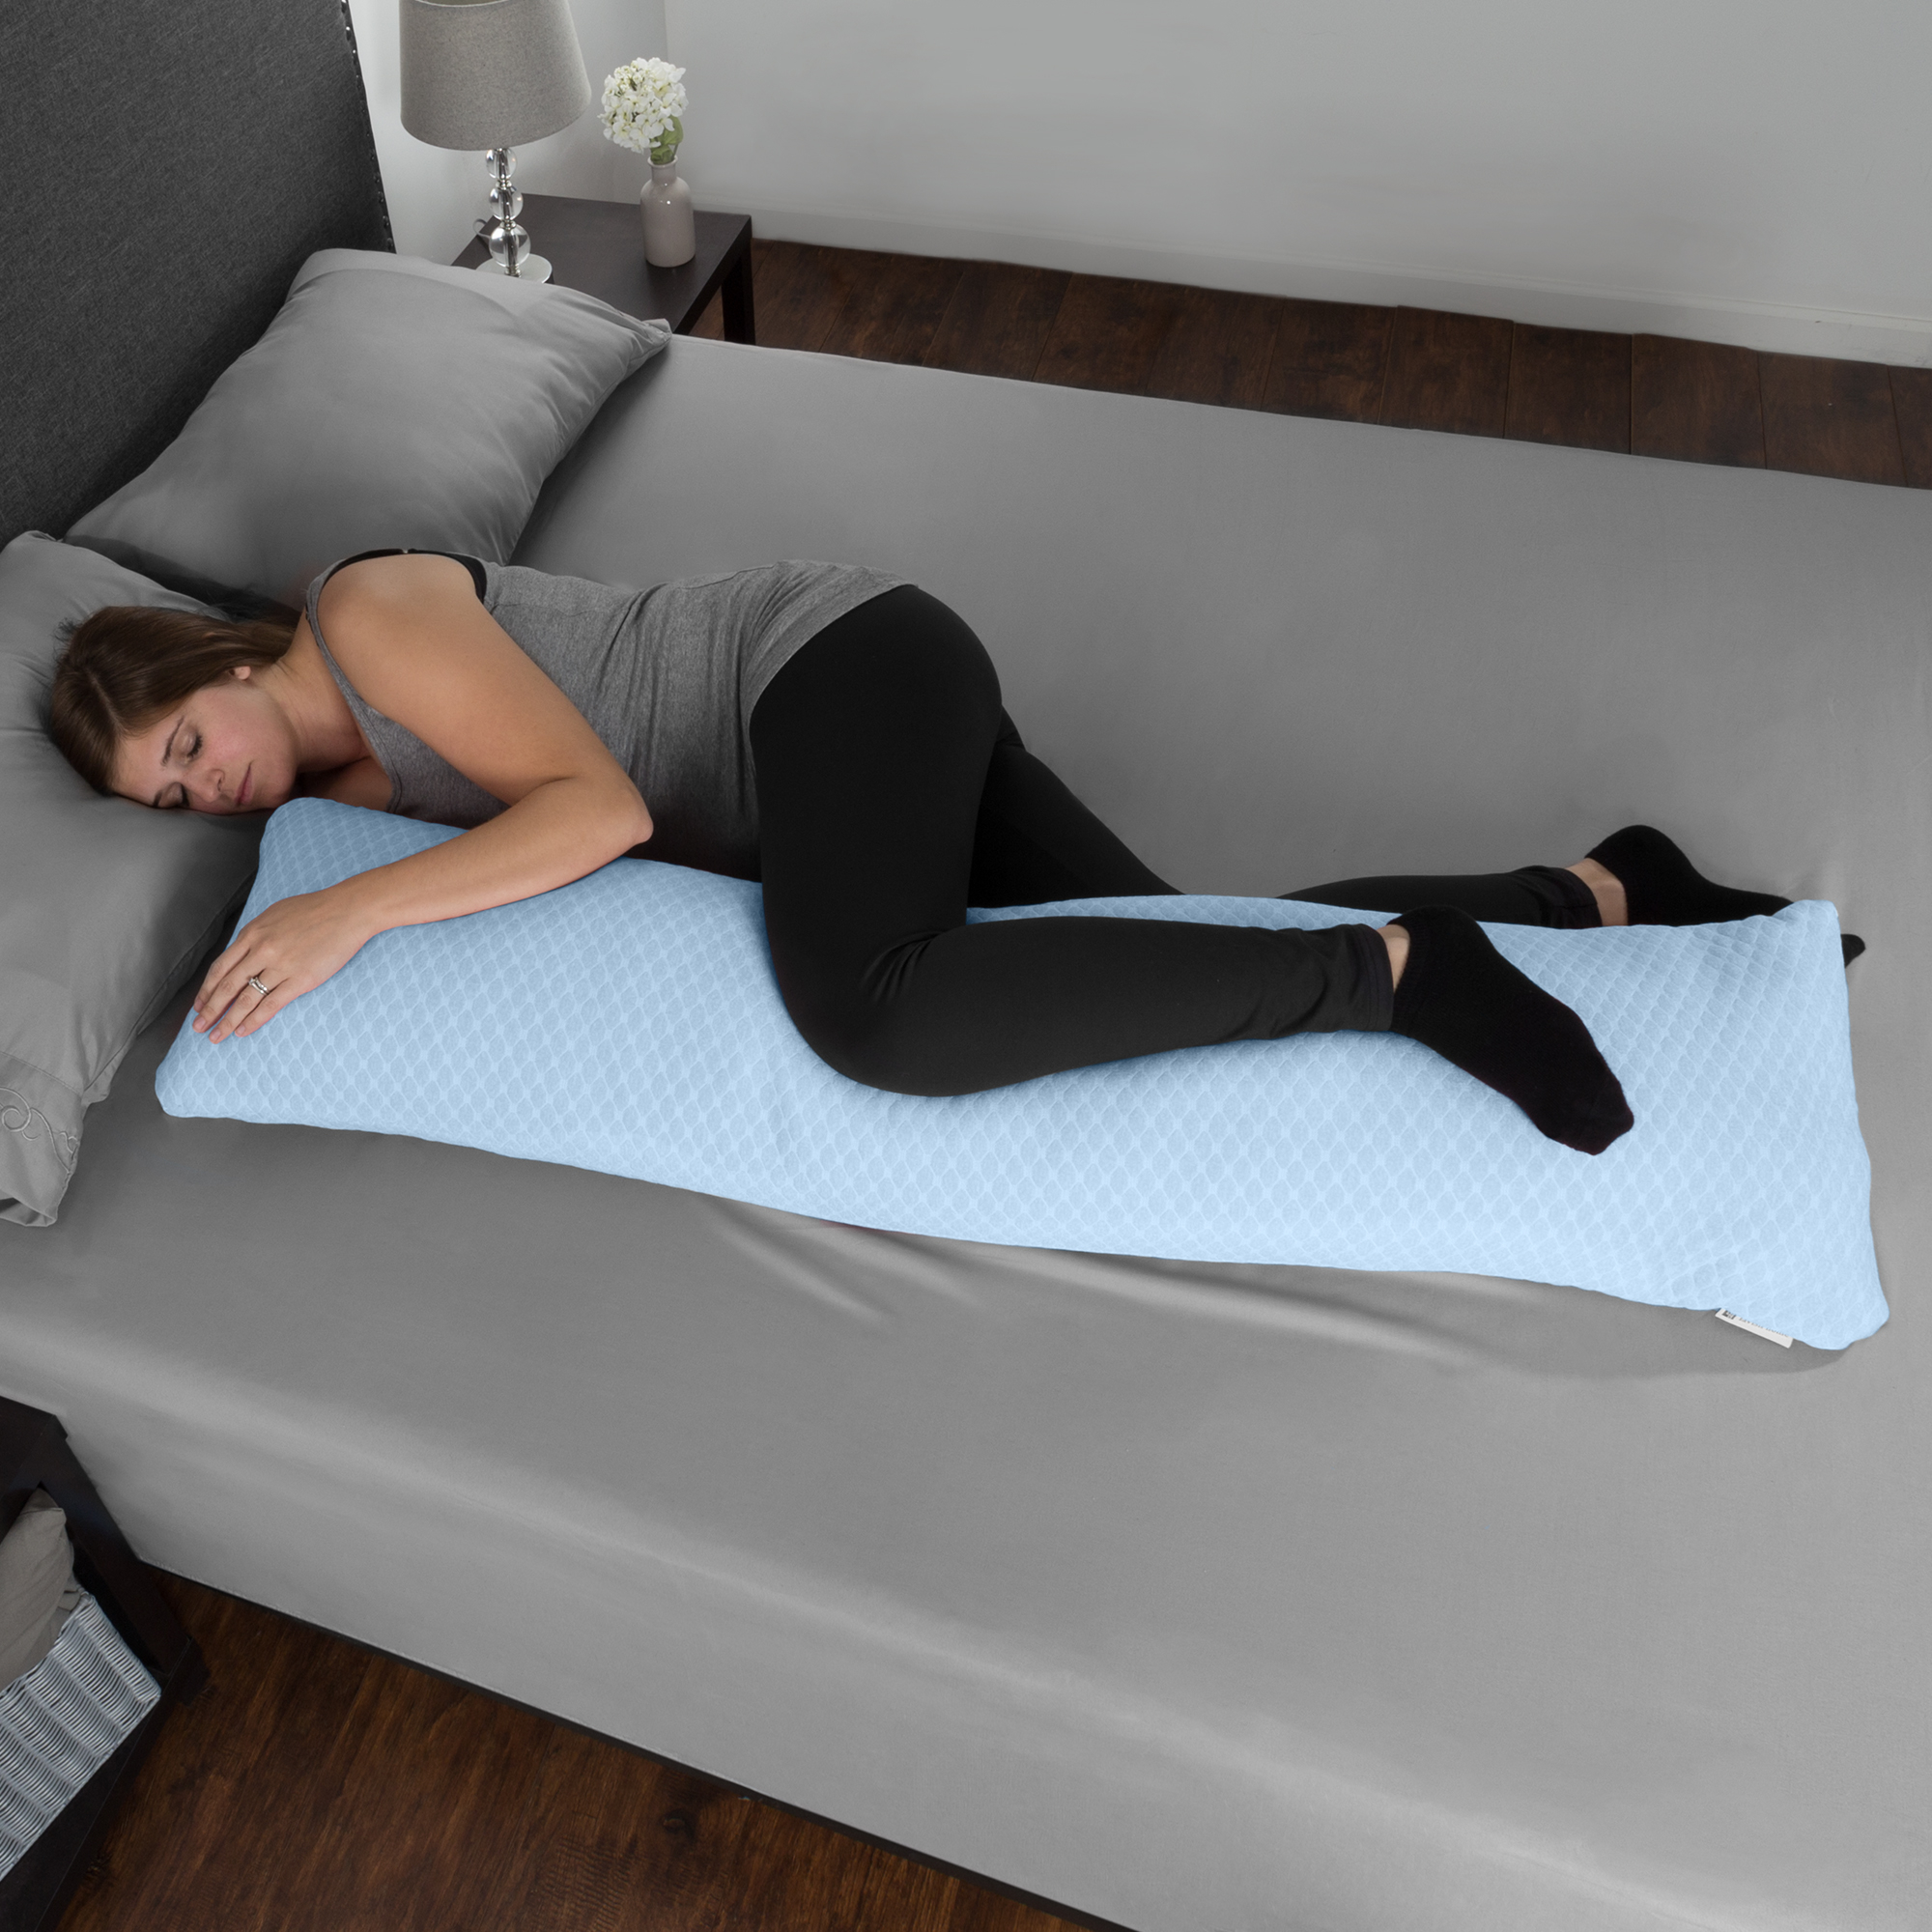 Blue Memory Foam Body Pillow Side Sleepers Aching Legs Rls Zippered Cover Pregnancy Pillow